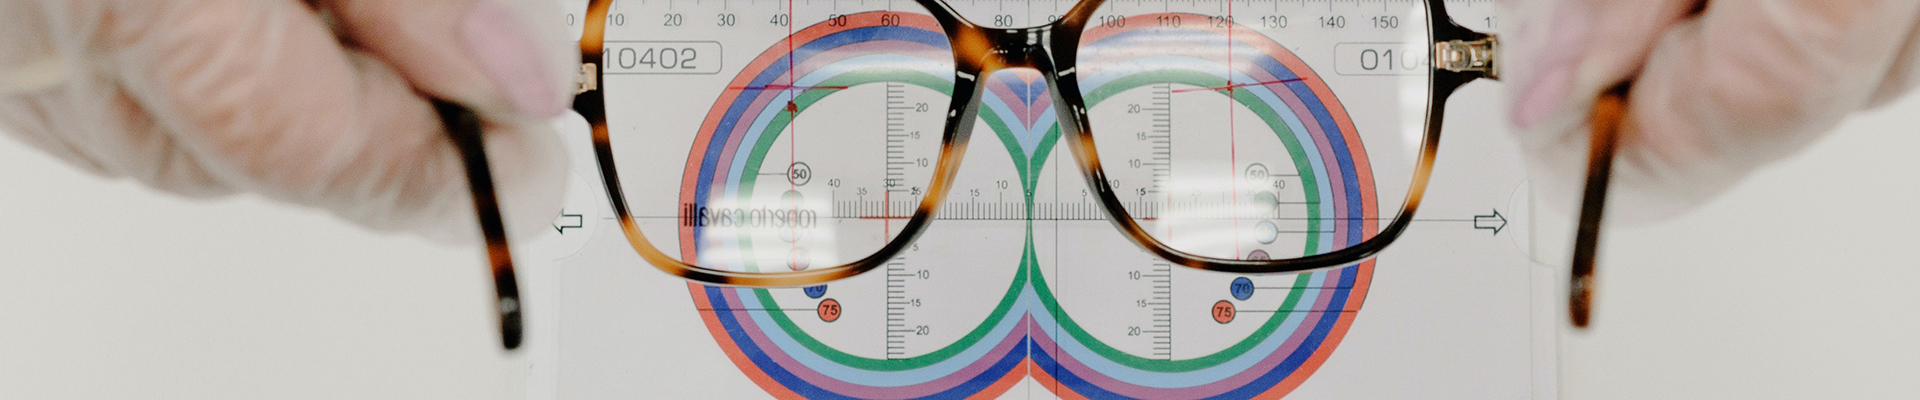 eyeglasses frame size detailed explanation